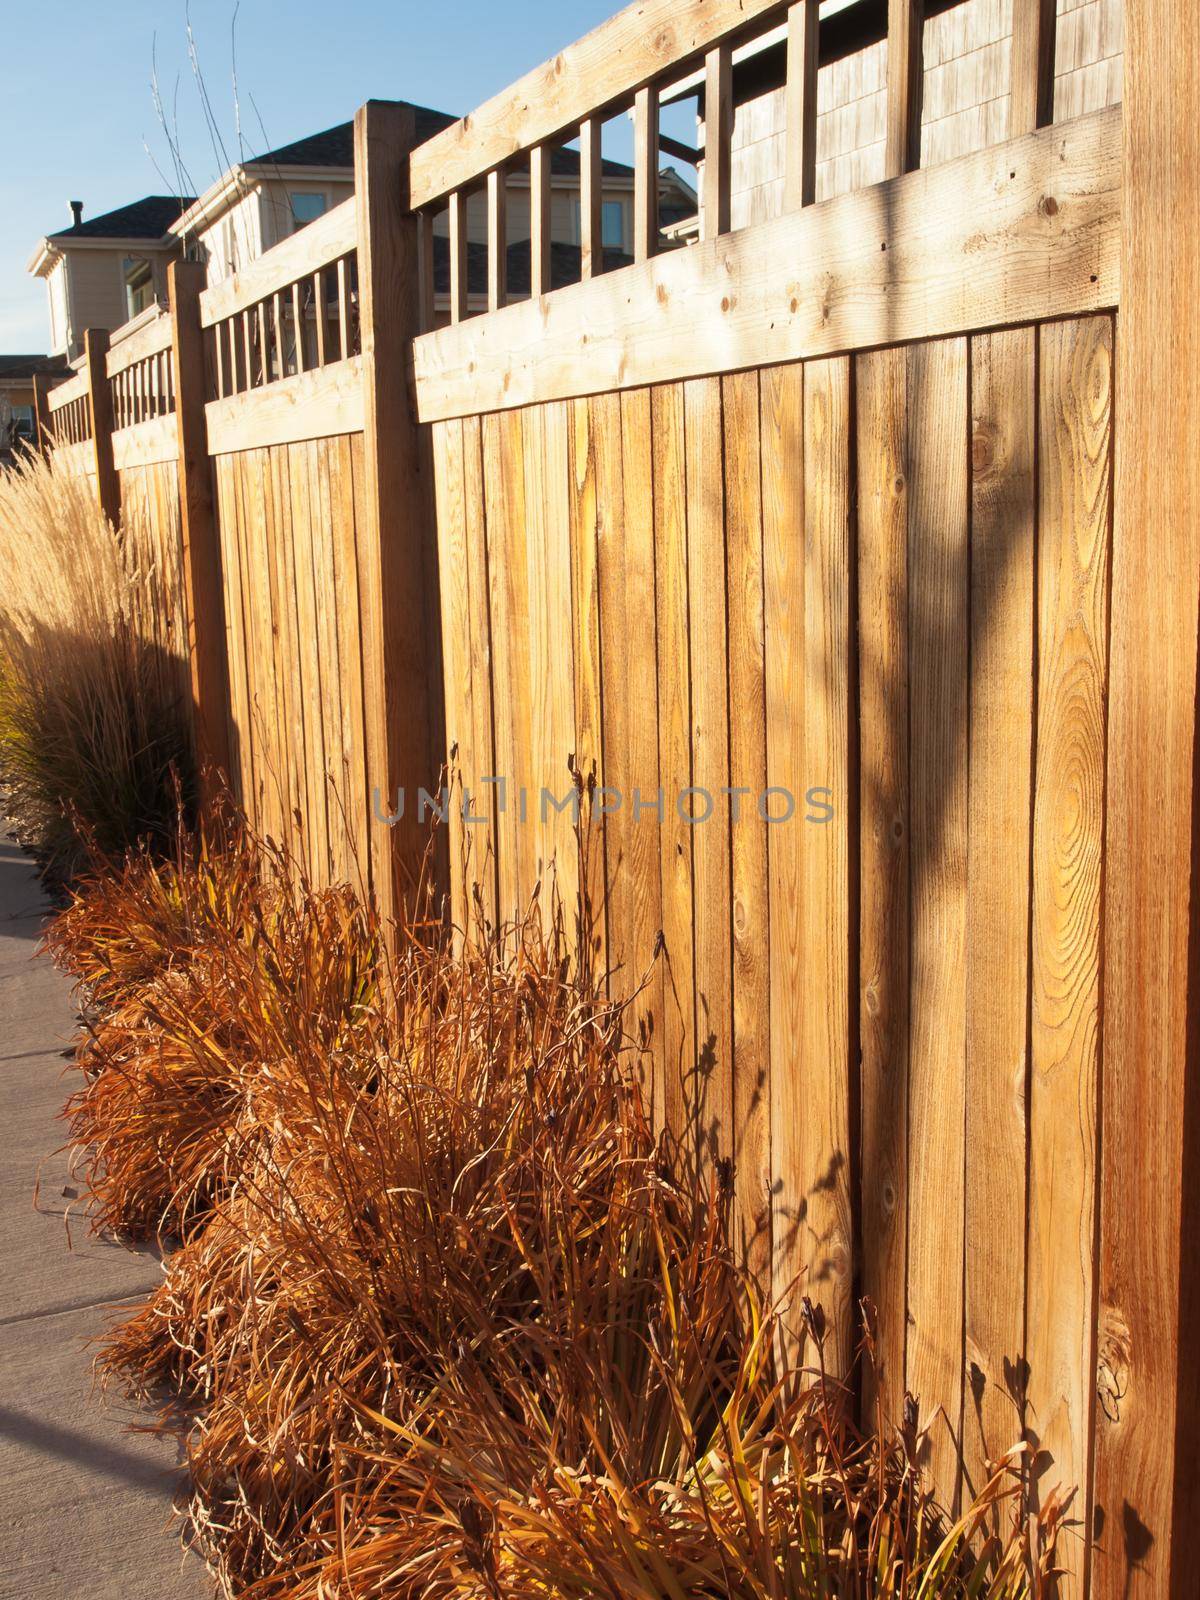 Wood fence next to the sidewalk in residential neighborhood.